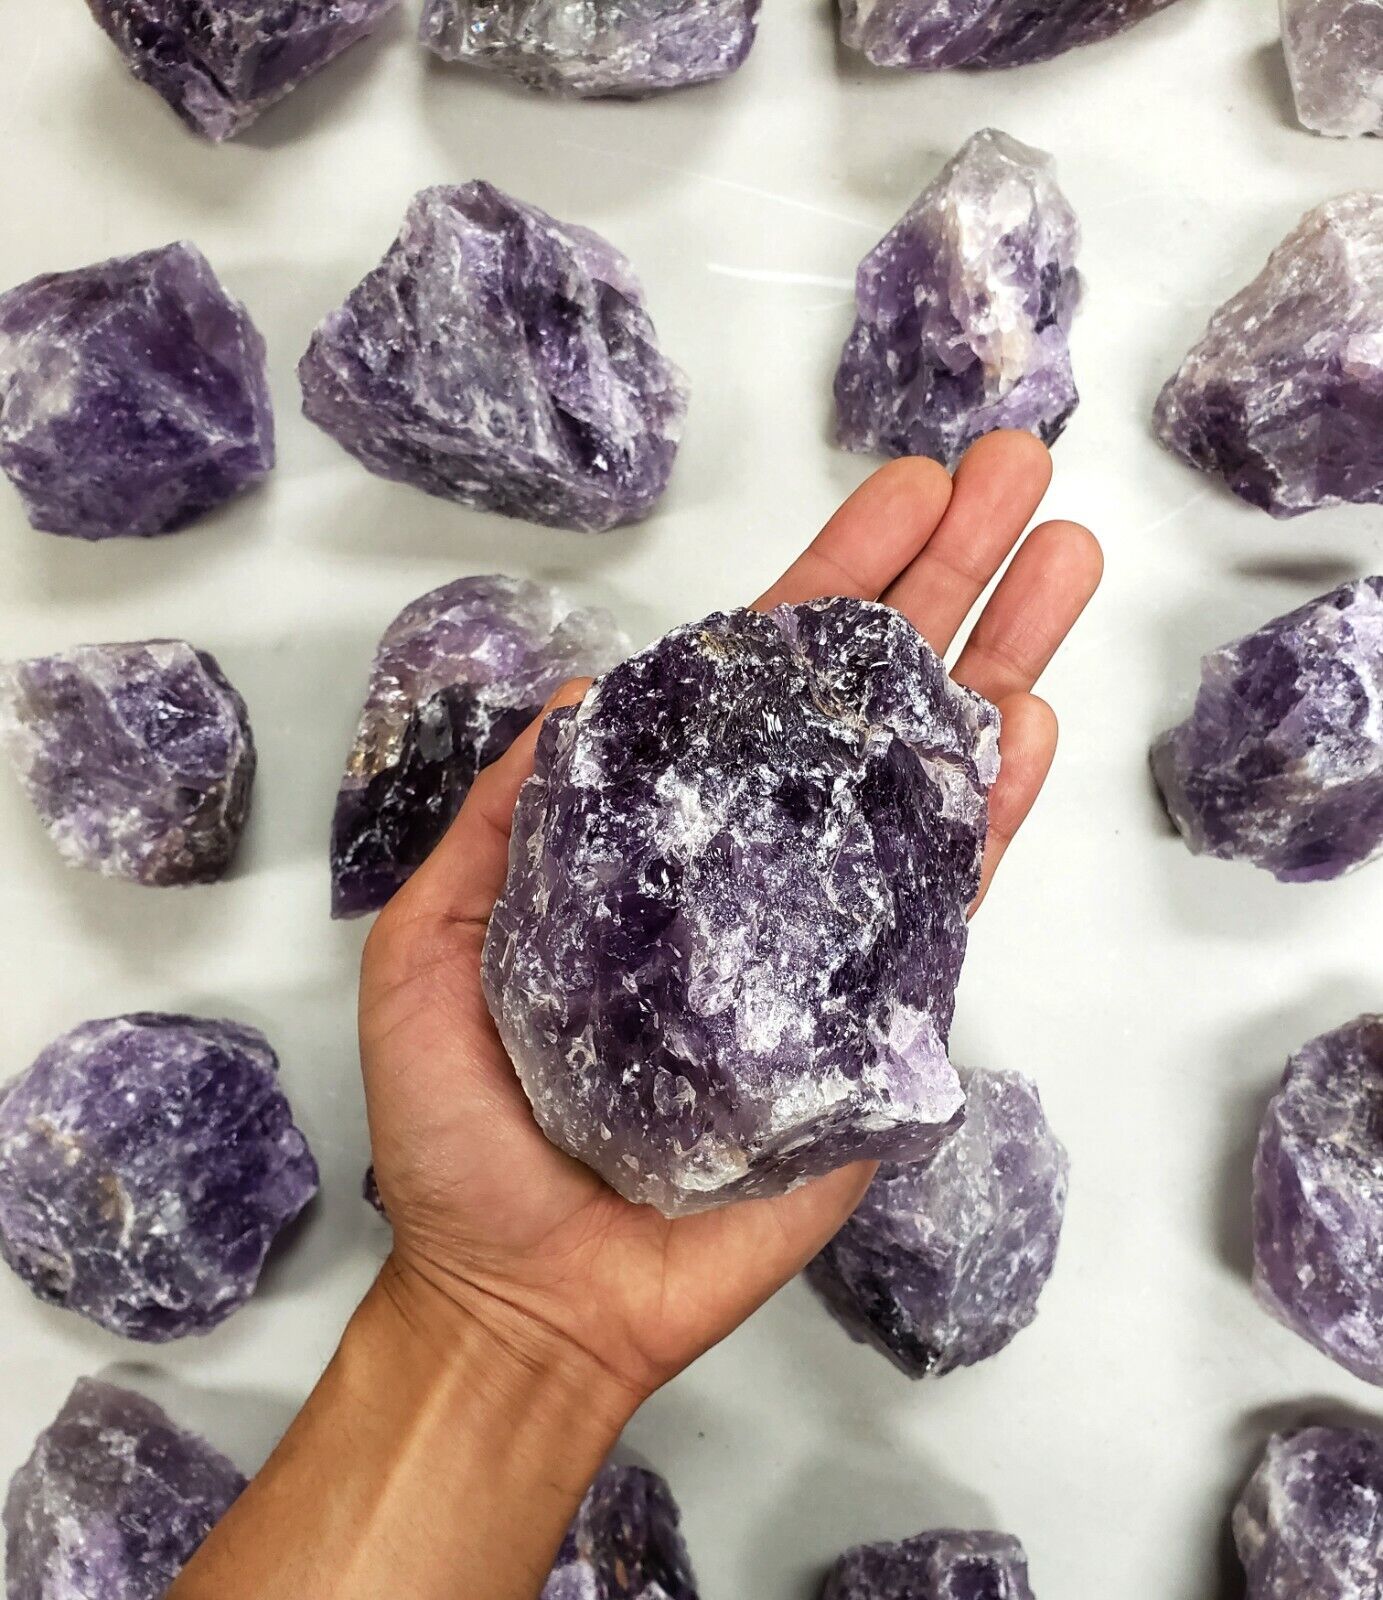 LARGE Amethyst Crystal Chunks, Rough Natural Healing Raw Lapidary Stones